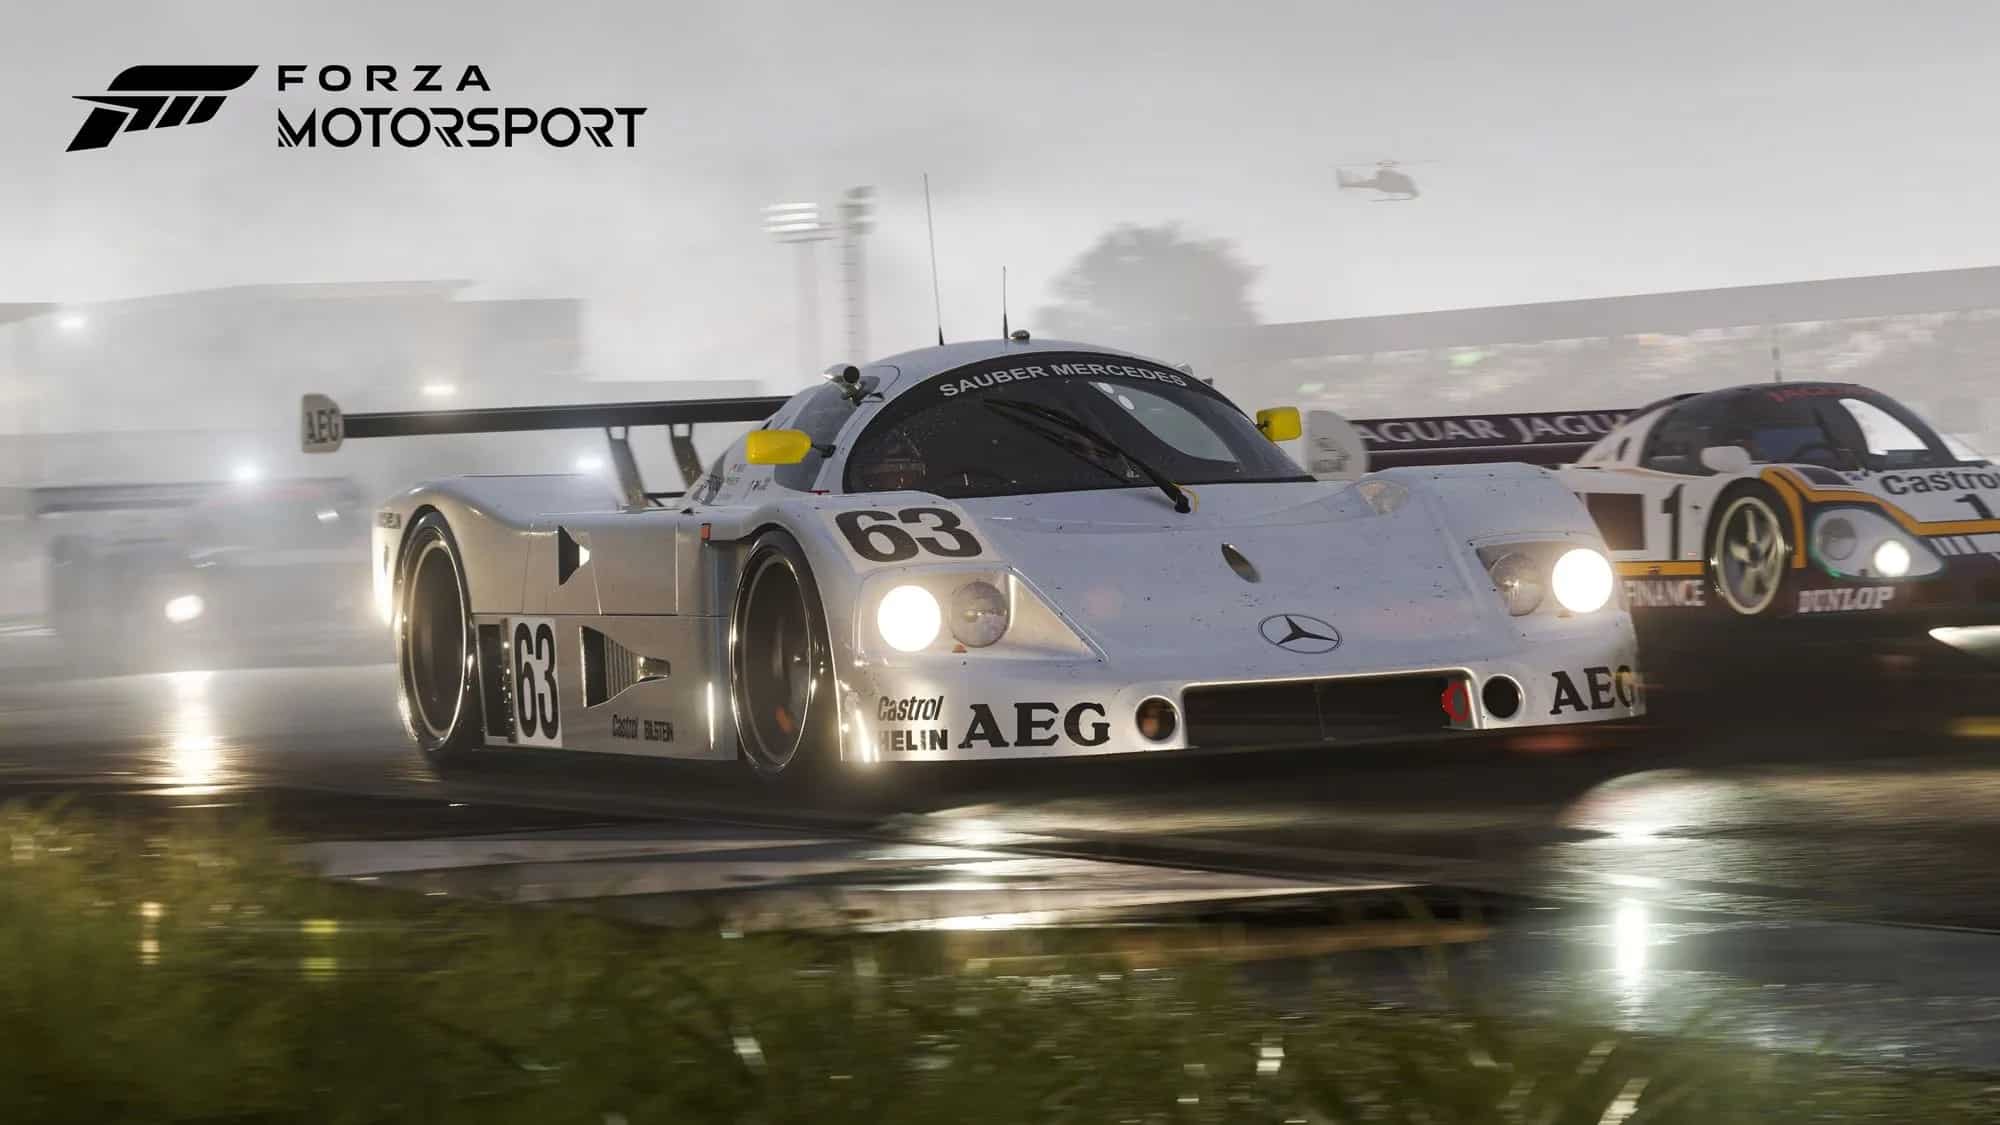 Microsoft promete novos conteúdos para Forza Motorsport no futuro 